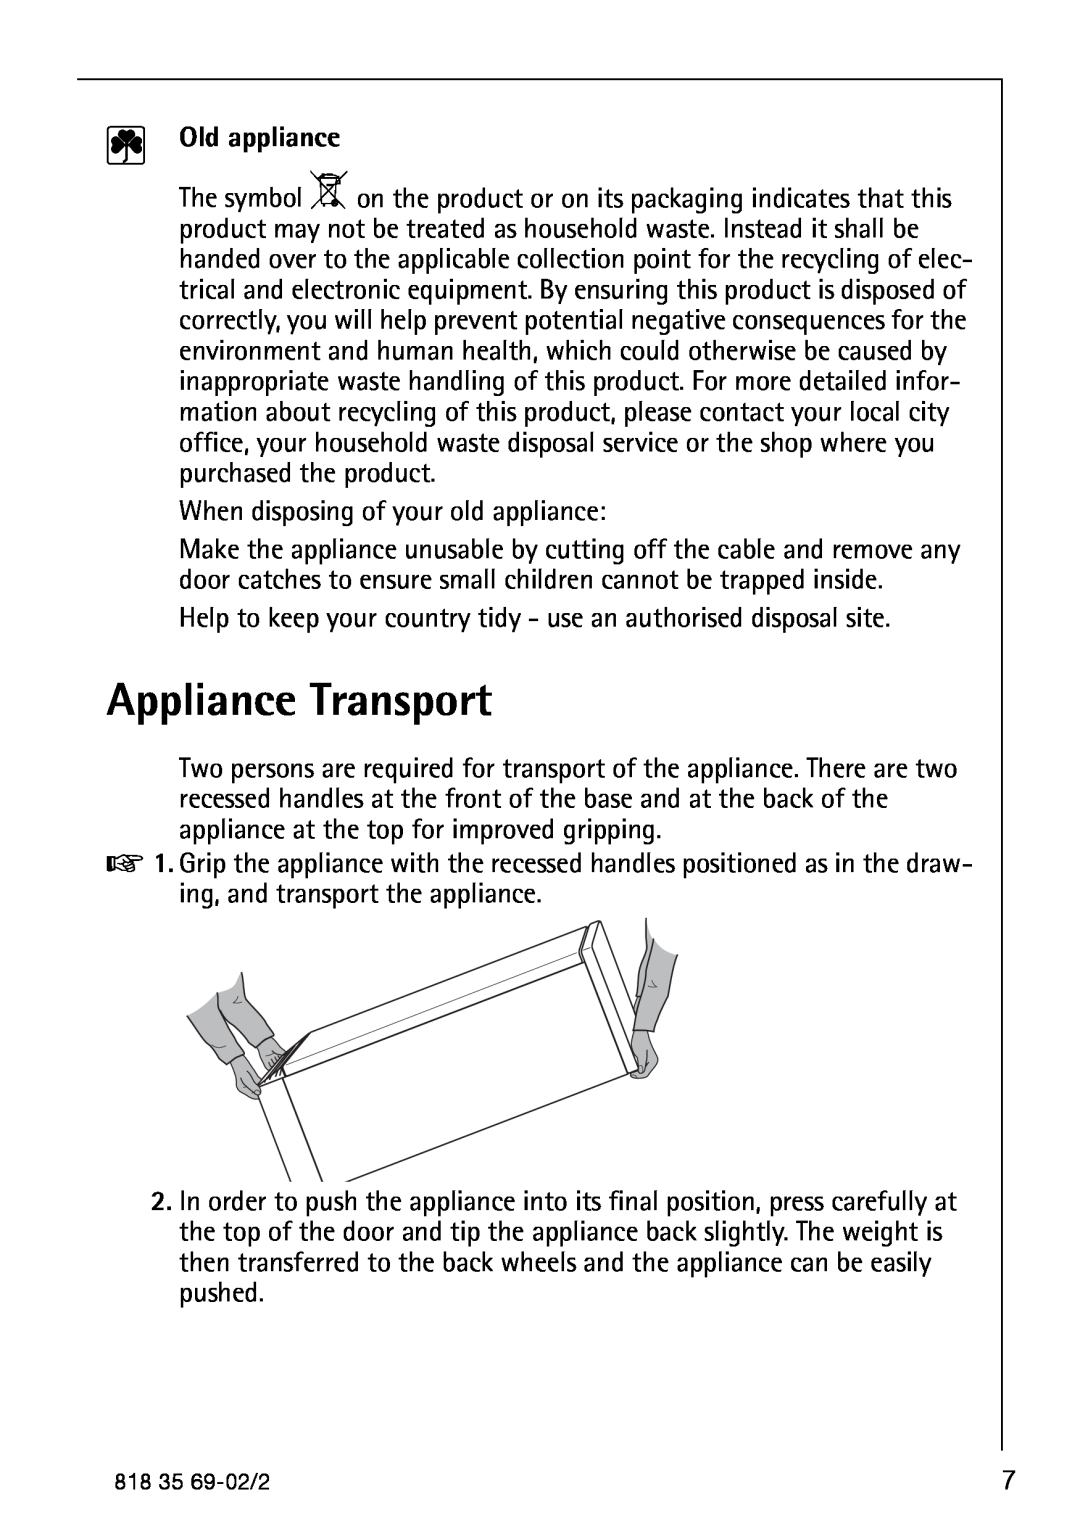 AEG S75578KG3 manual Appliance Transport, Old appliance 